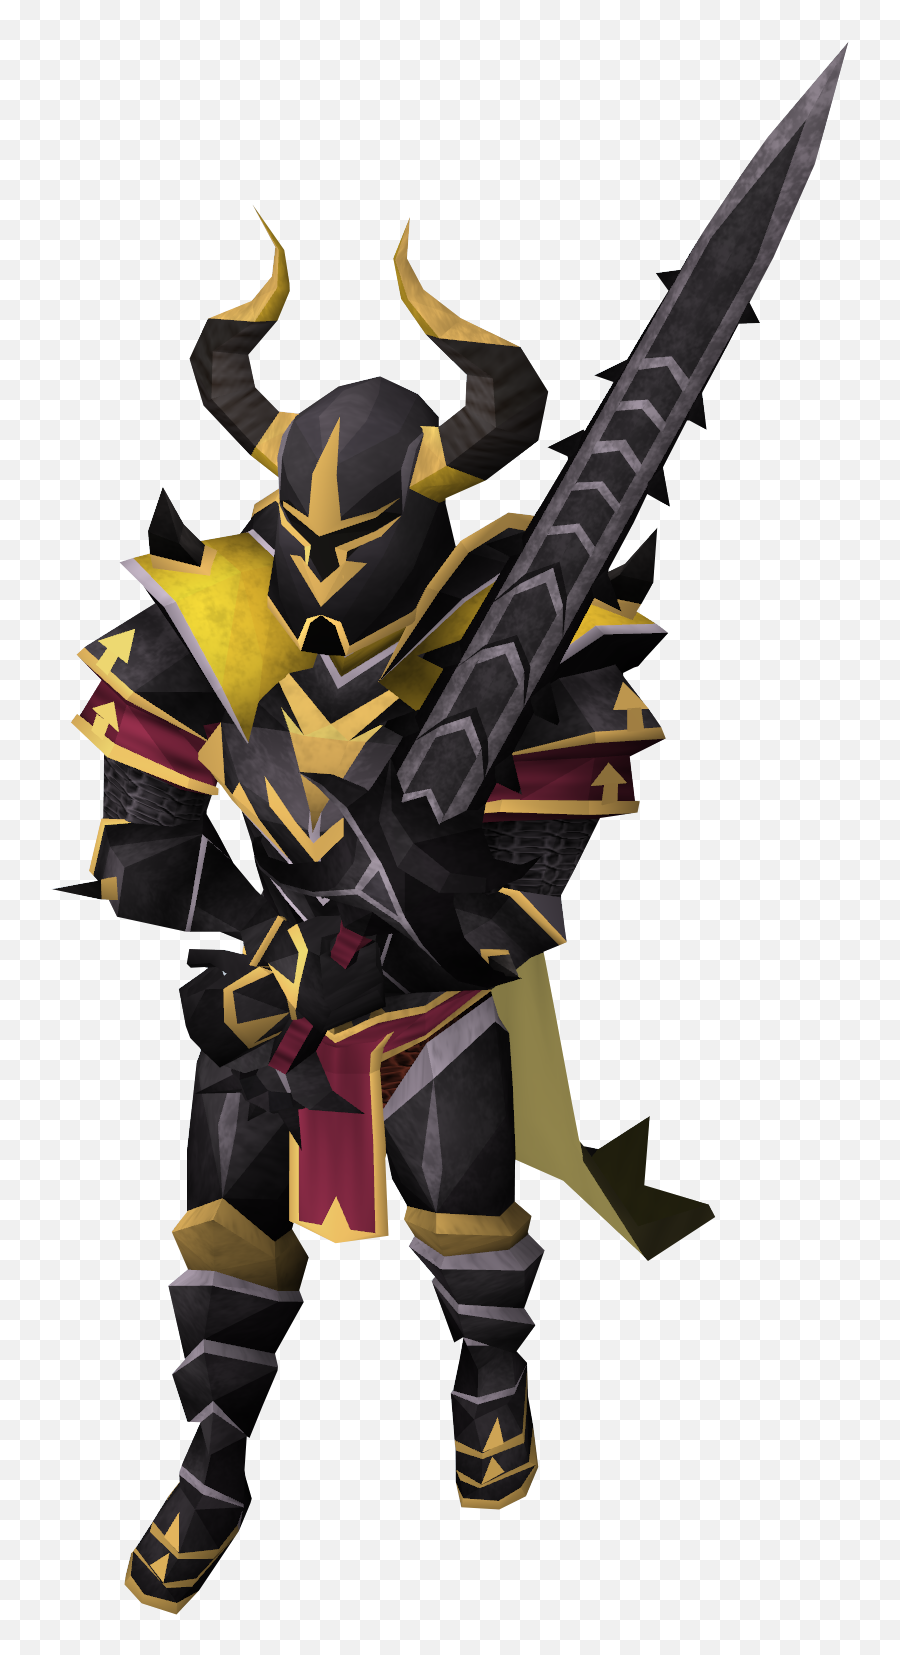 Elite Black Knight - Runescape Elite Black Knight Png,Black Knight Png